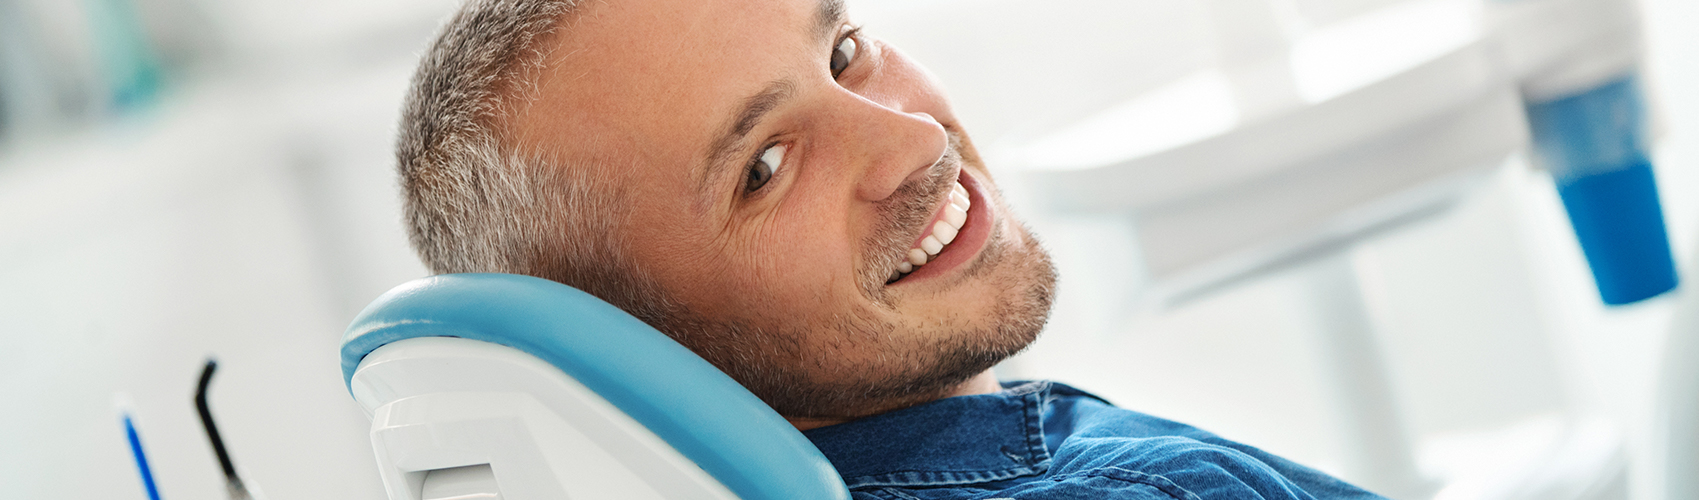 guy in dental chair smiling